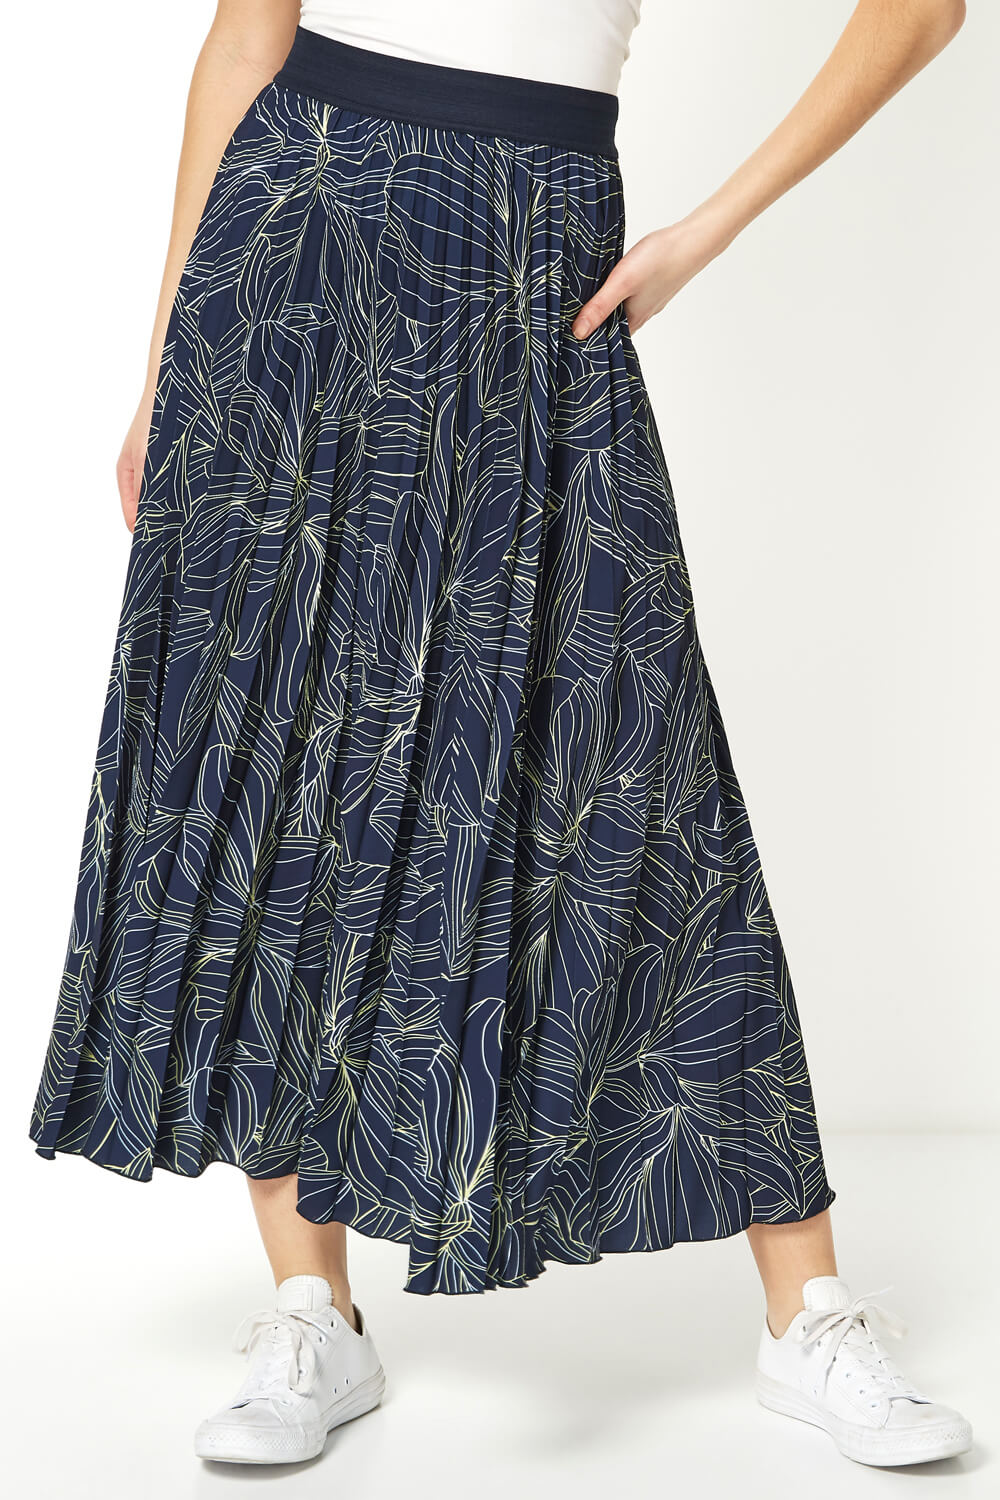 Linear Floral Print Pleated Midi Skirt in Navy - Roman Originals UK